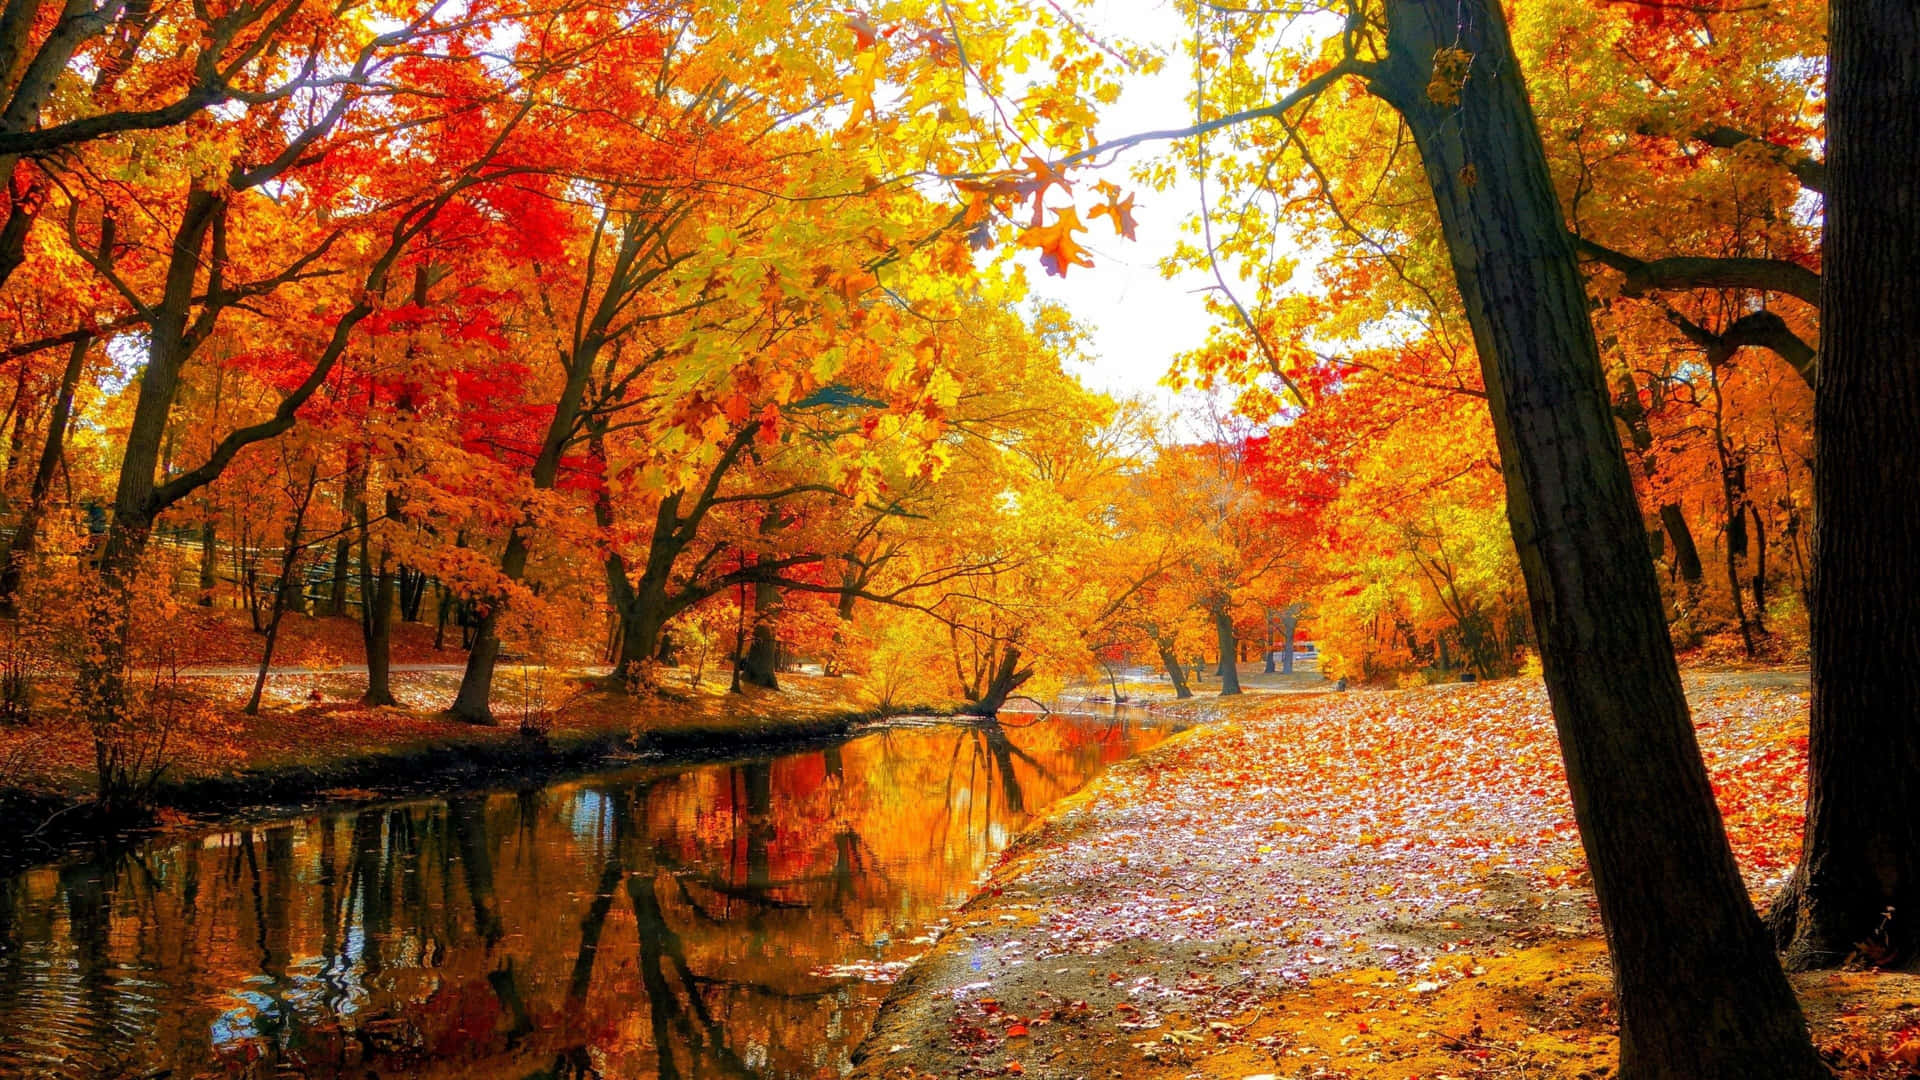 Take a Moment to Enjoy the Splendor of Fall